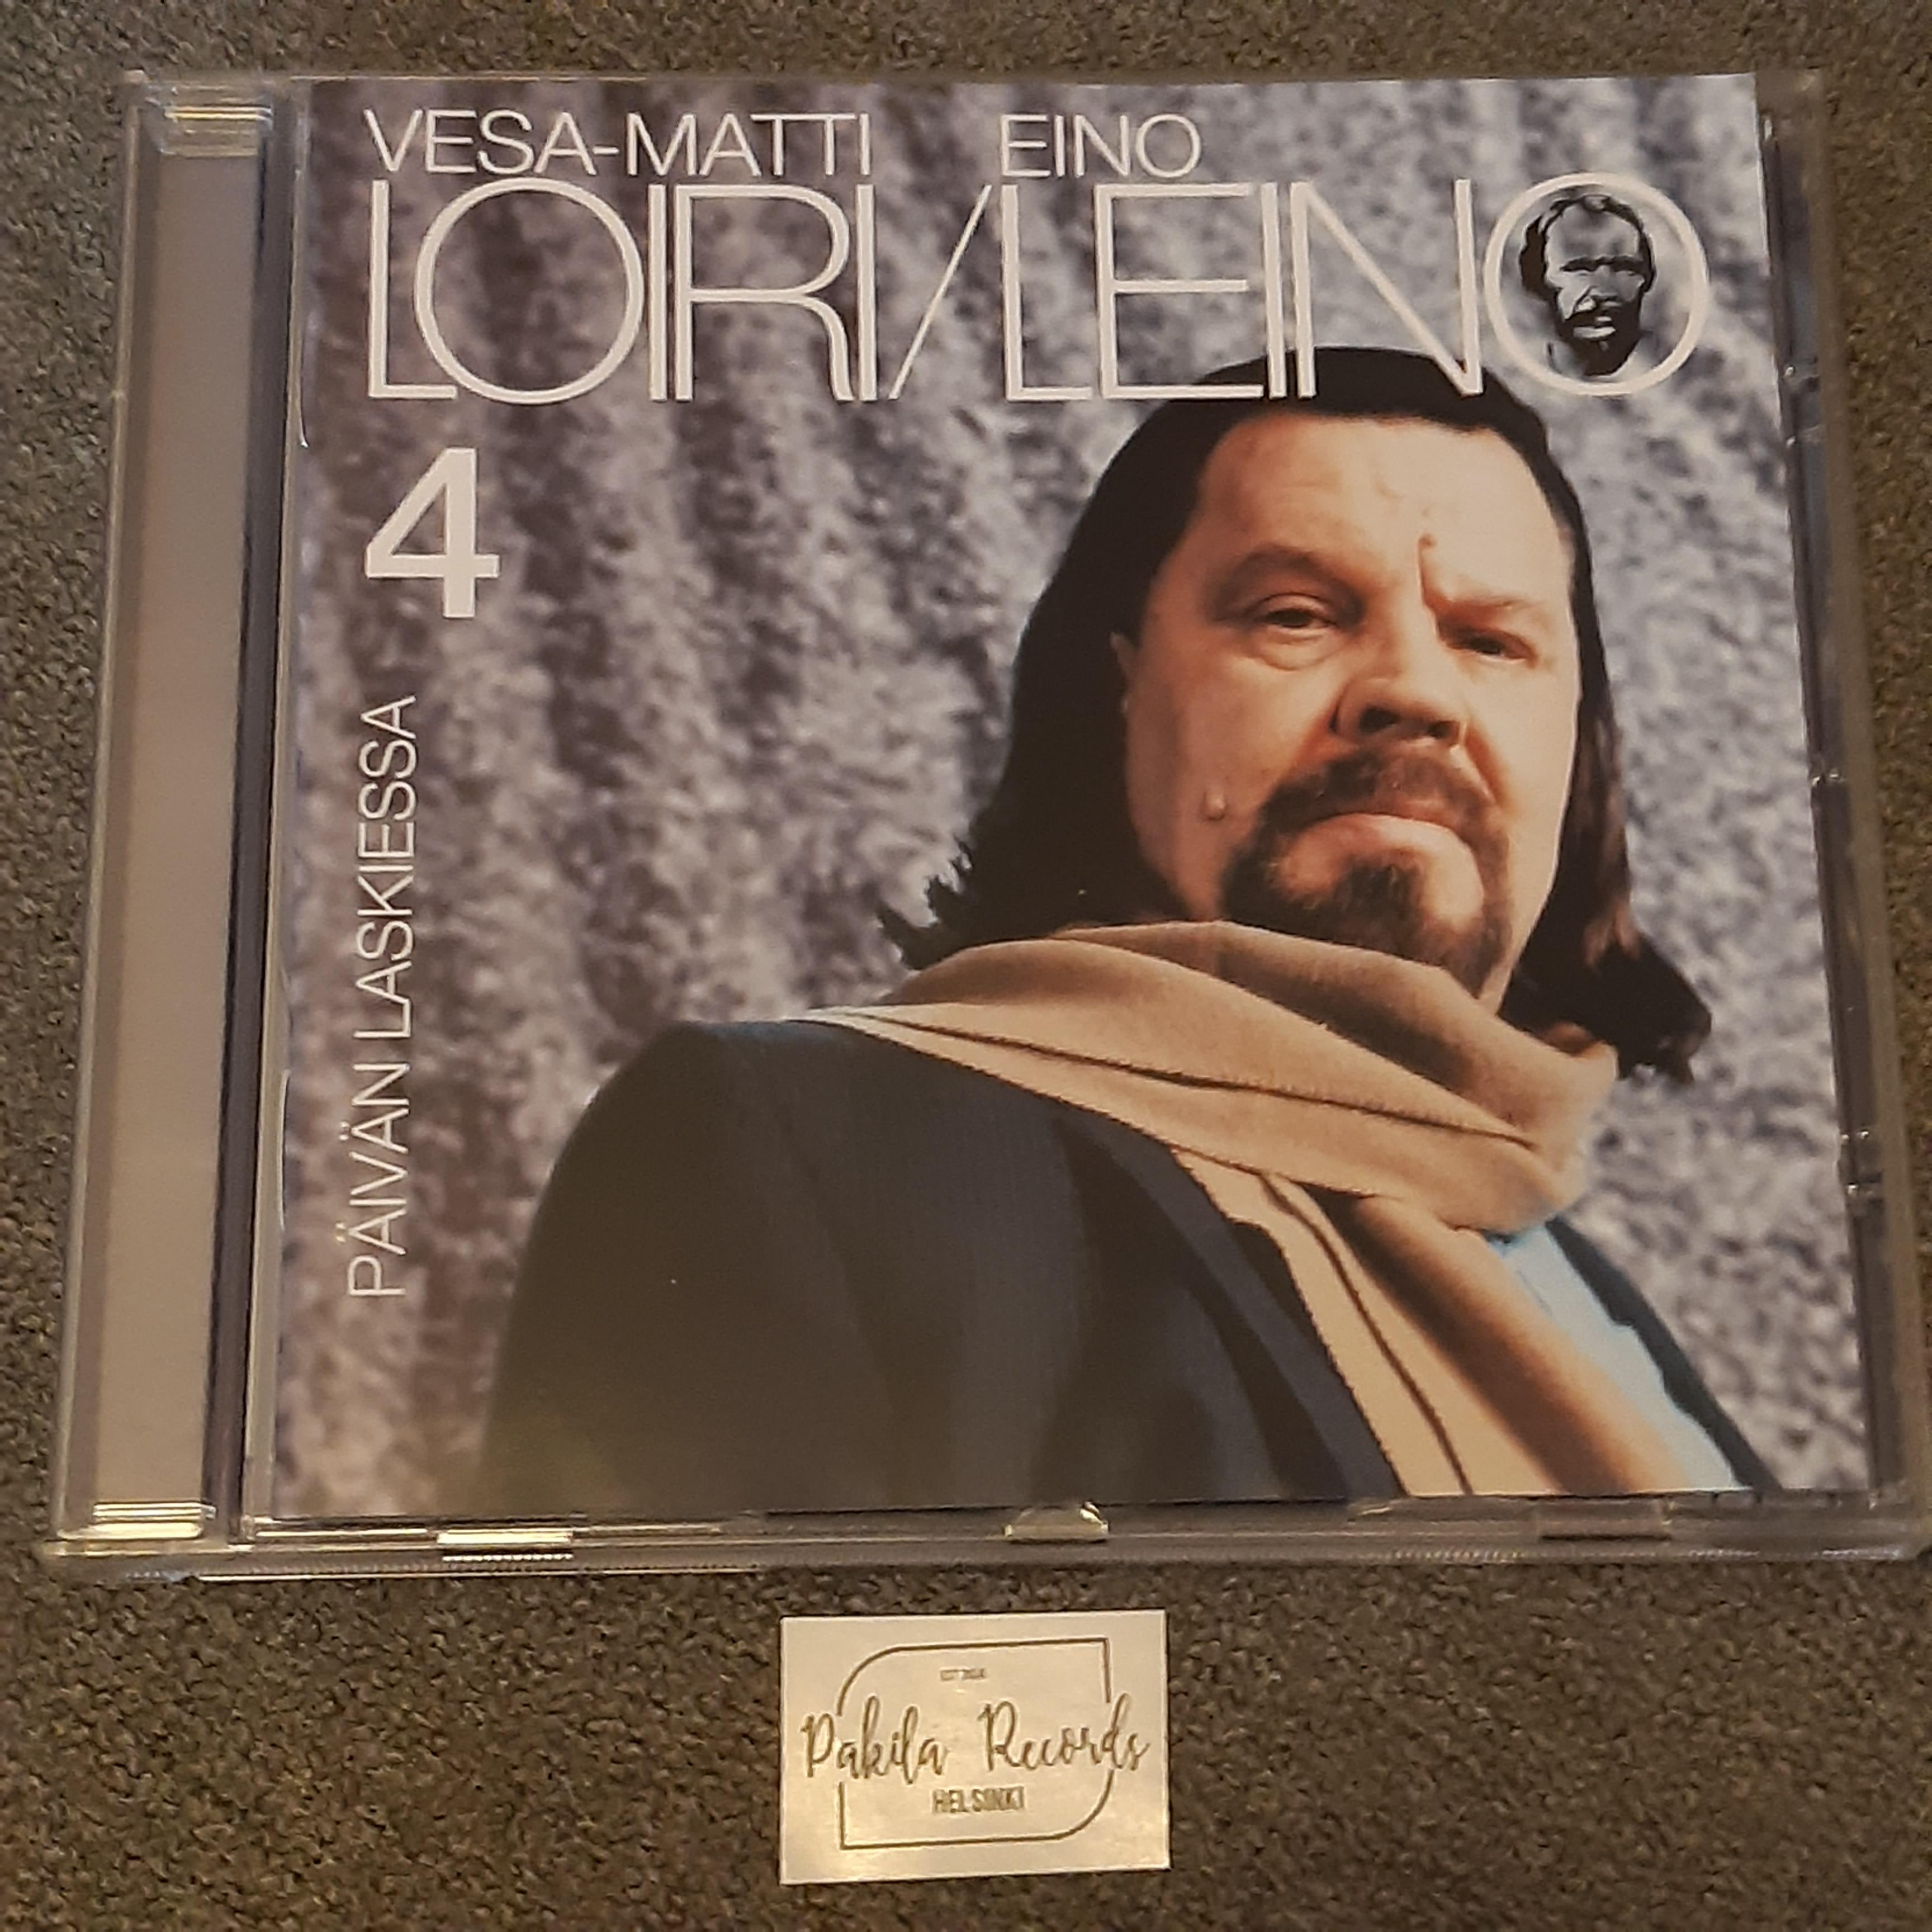 Vesa-Matti Loiri - Eino Leino 4 - CD (käytetty)